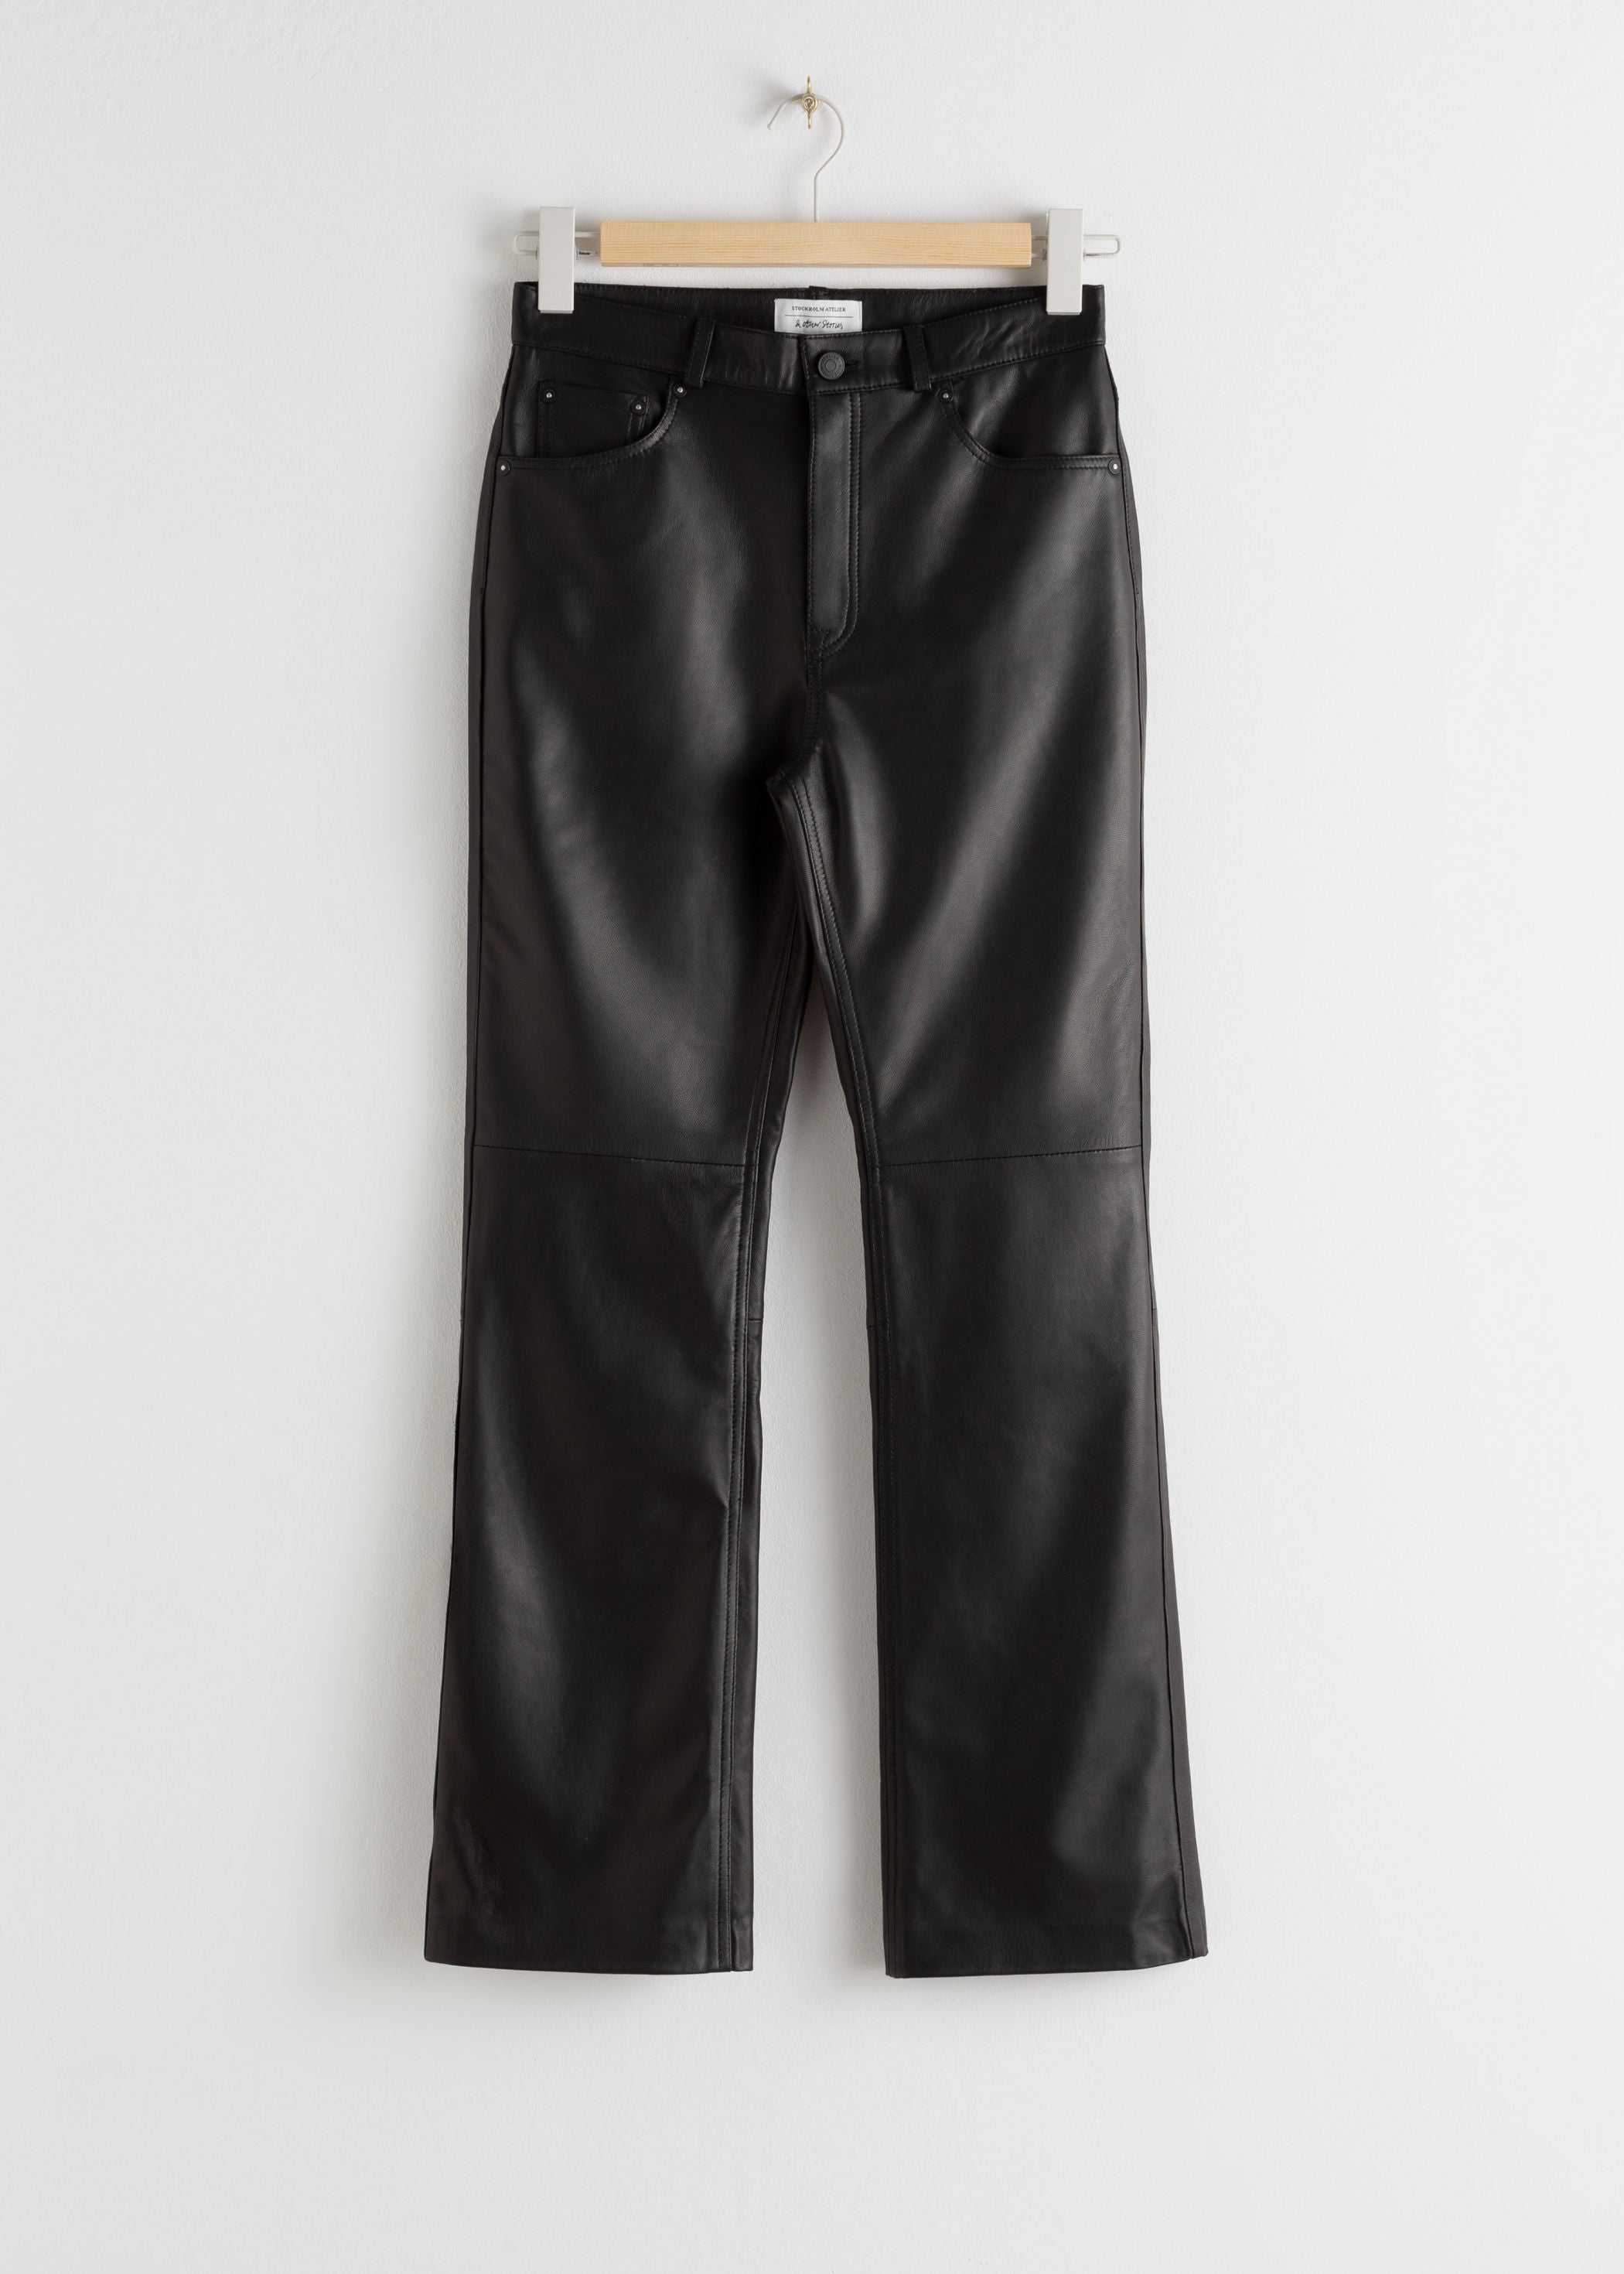 black leatherette pants